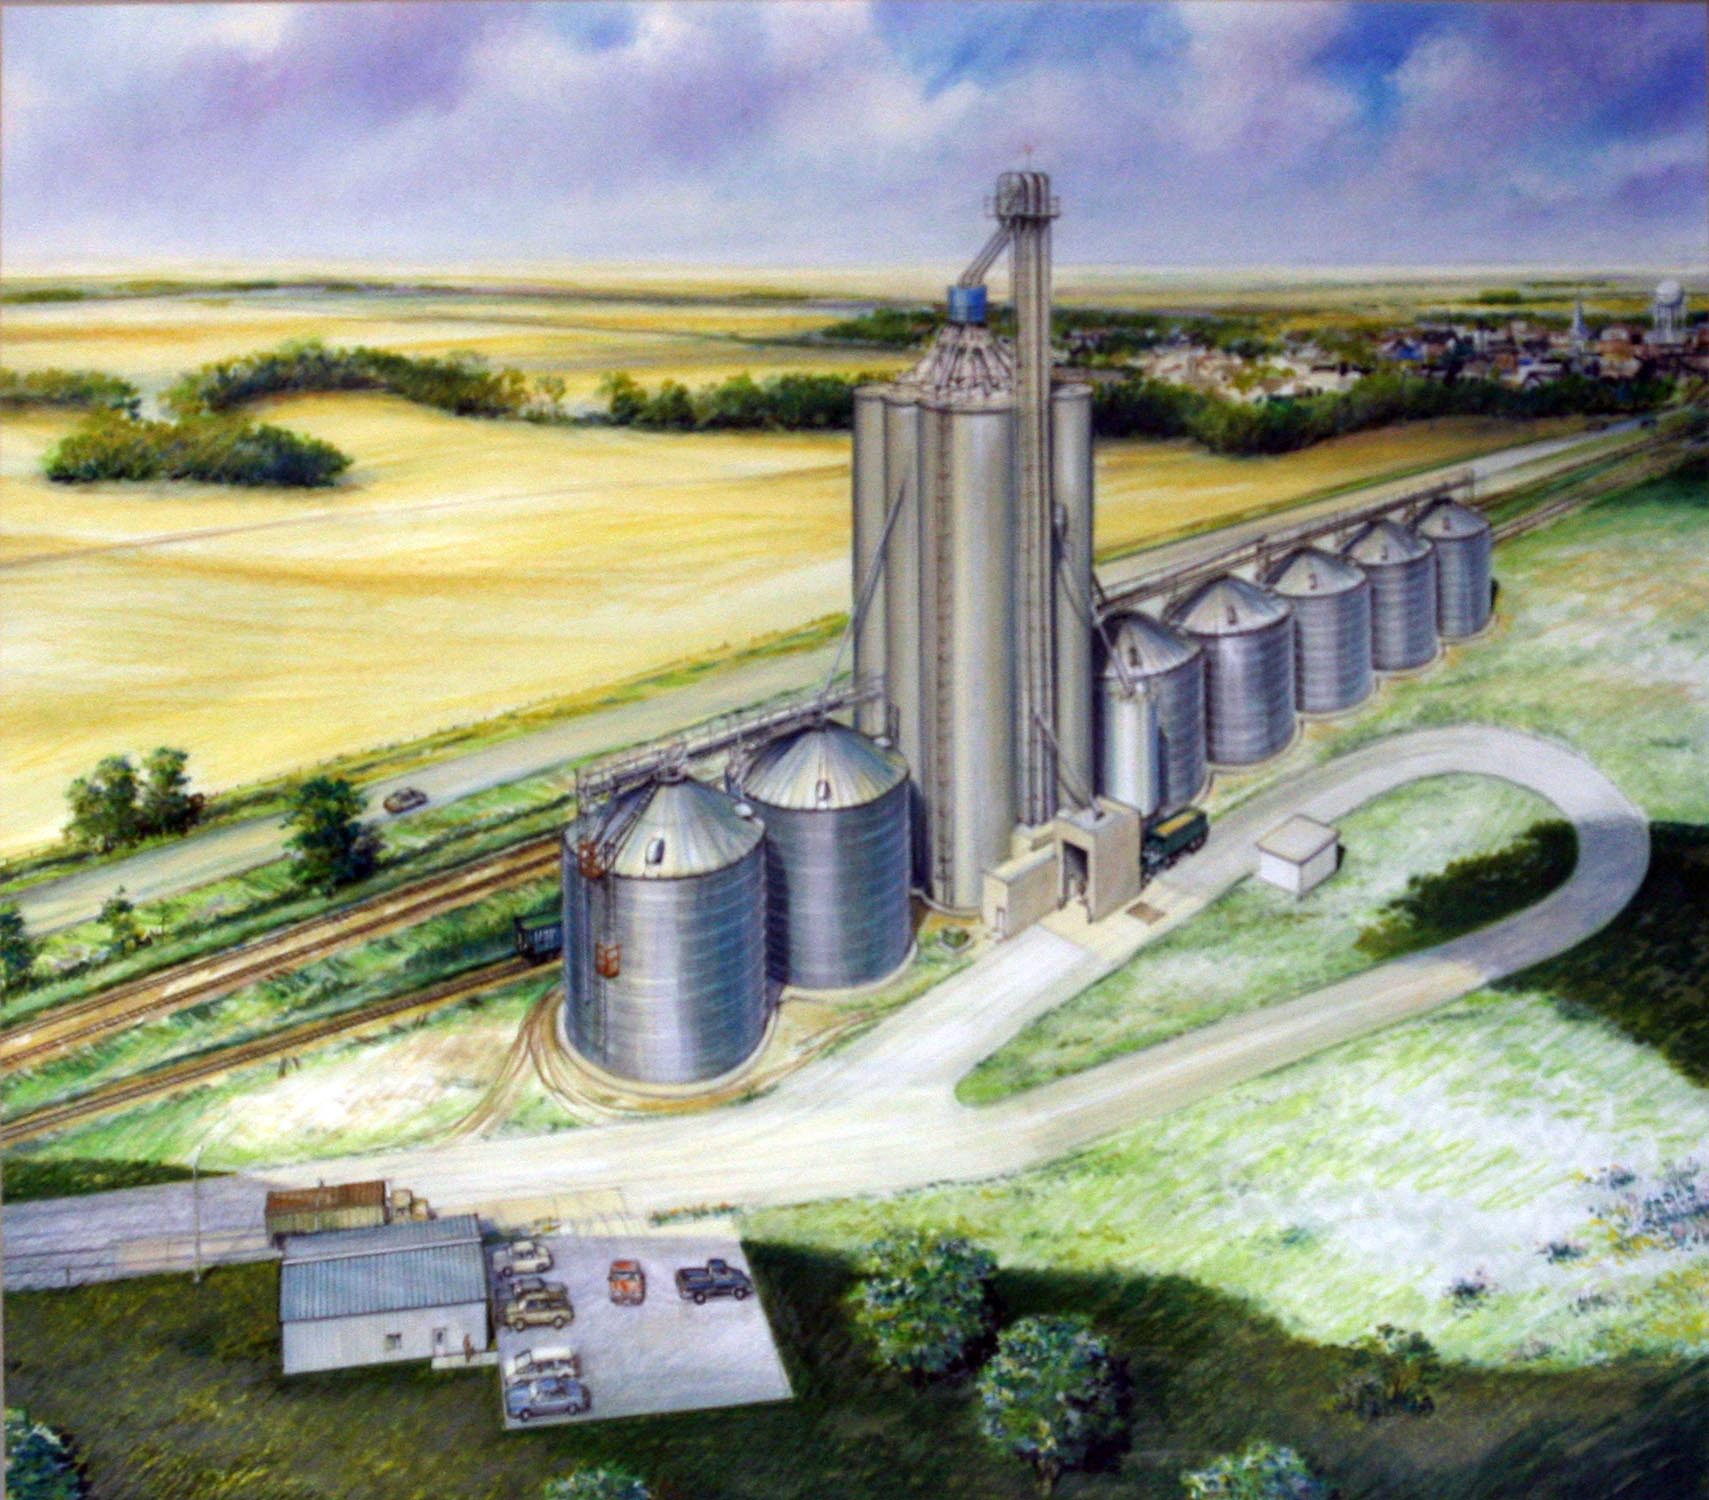 Illustration of barley storage faciilty in Conrad, Montana